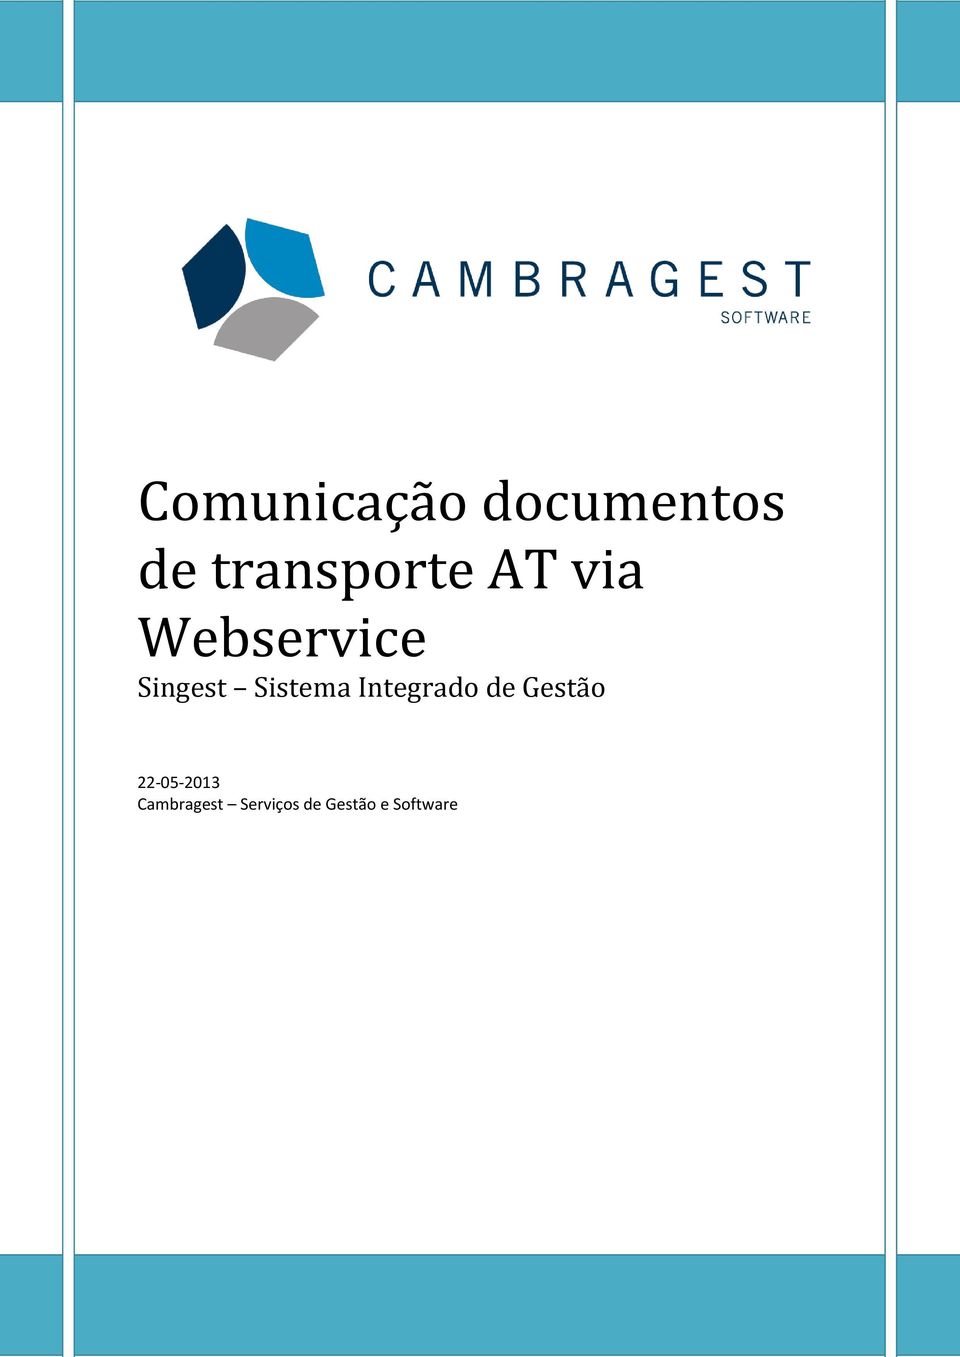 Webservice 22-05-2013